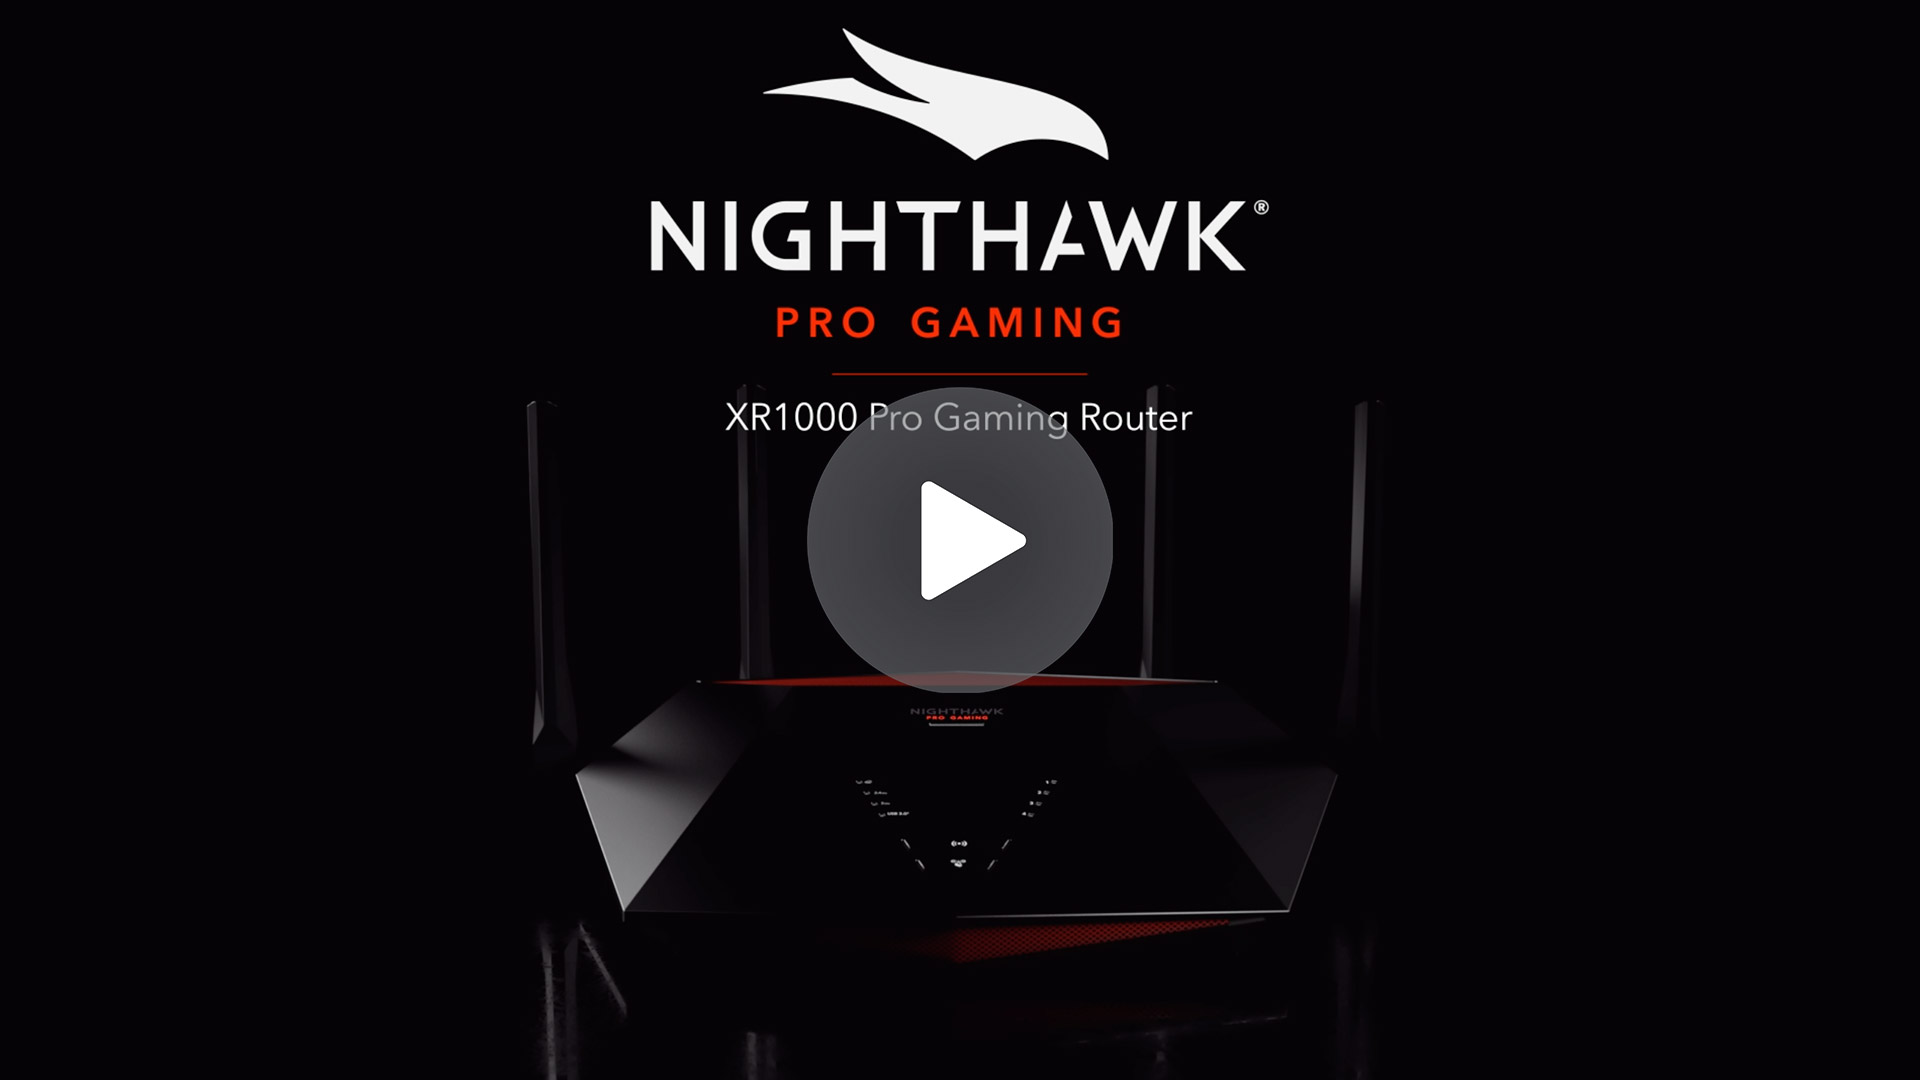 Introducing the Nighthawk Pro Gaming XR1000